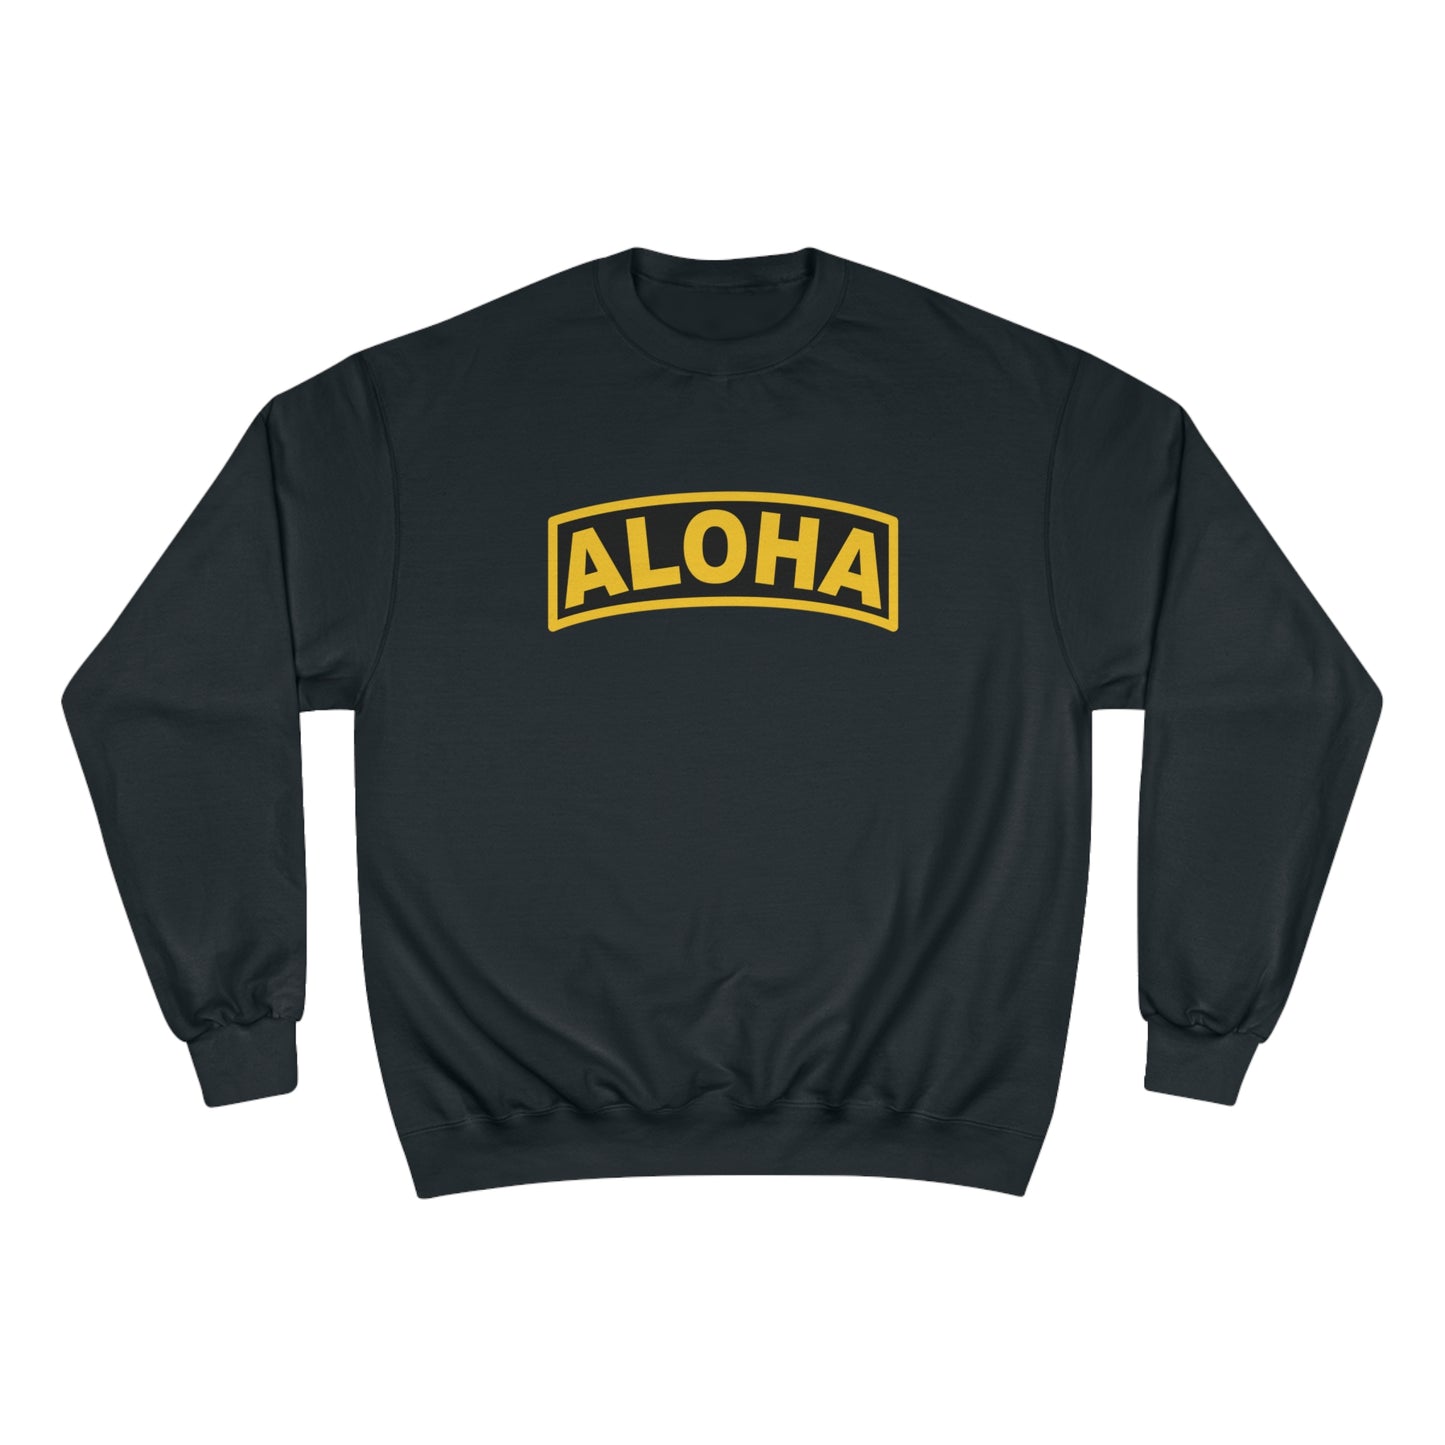 Aloha Champion Sweatshirt